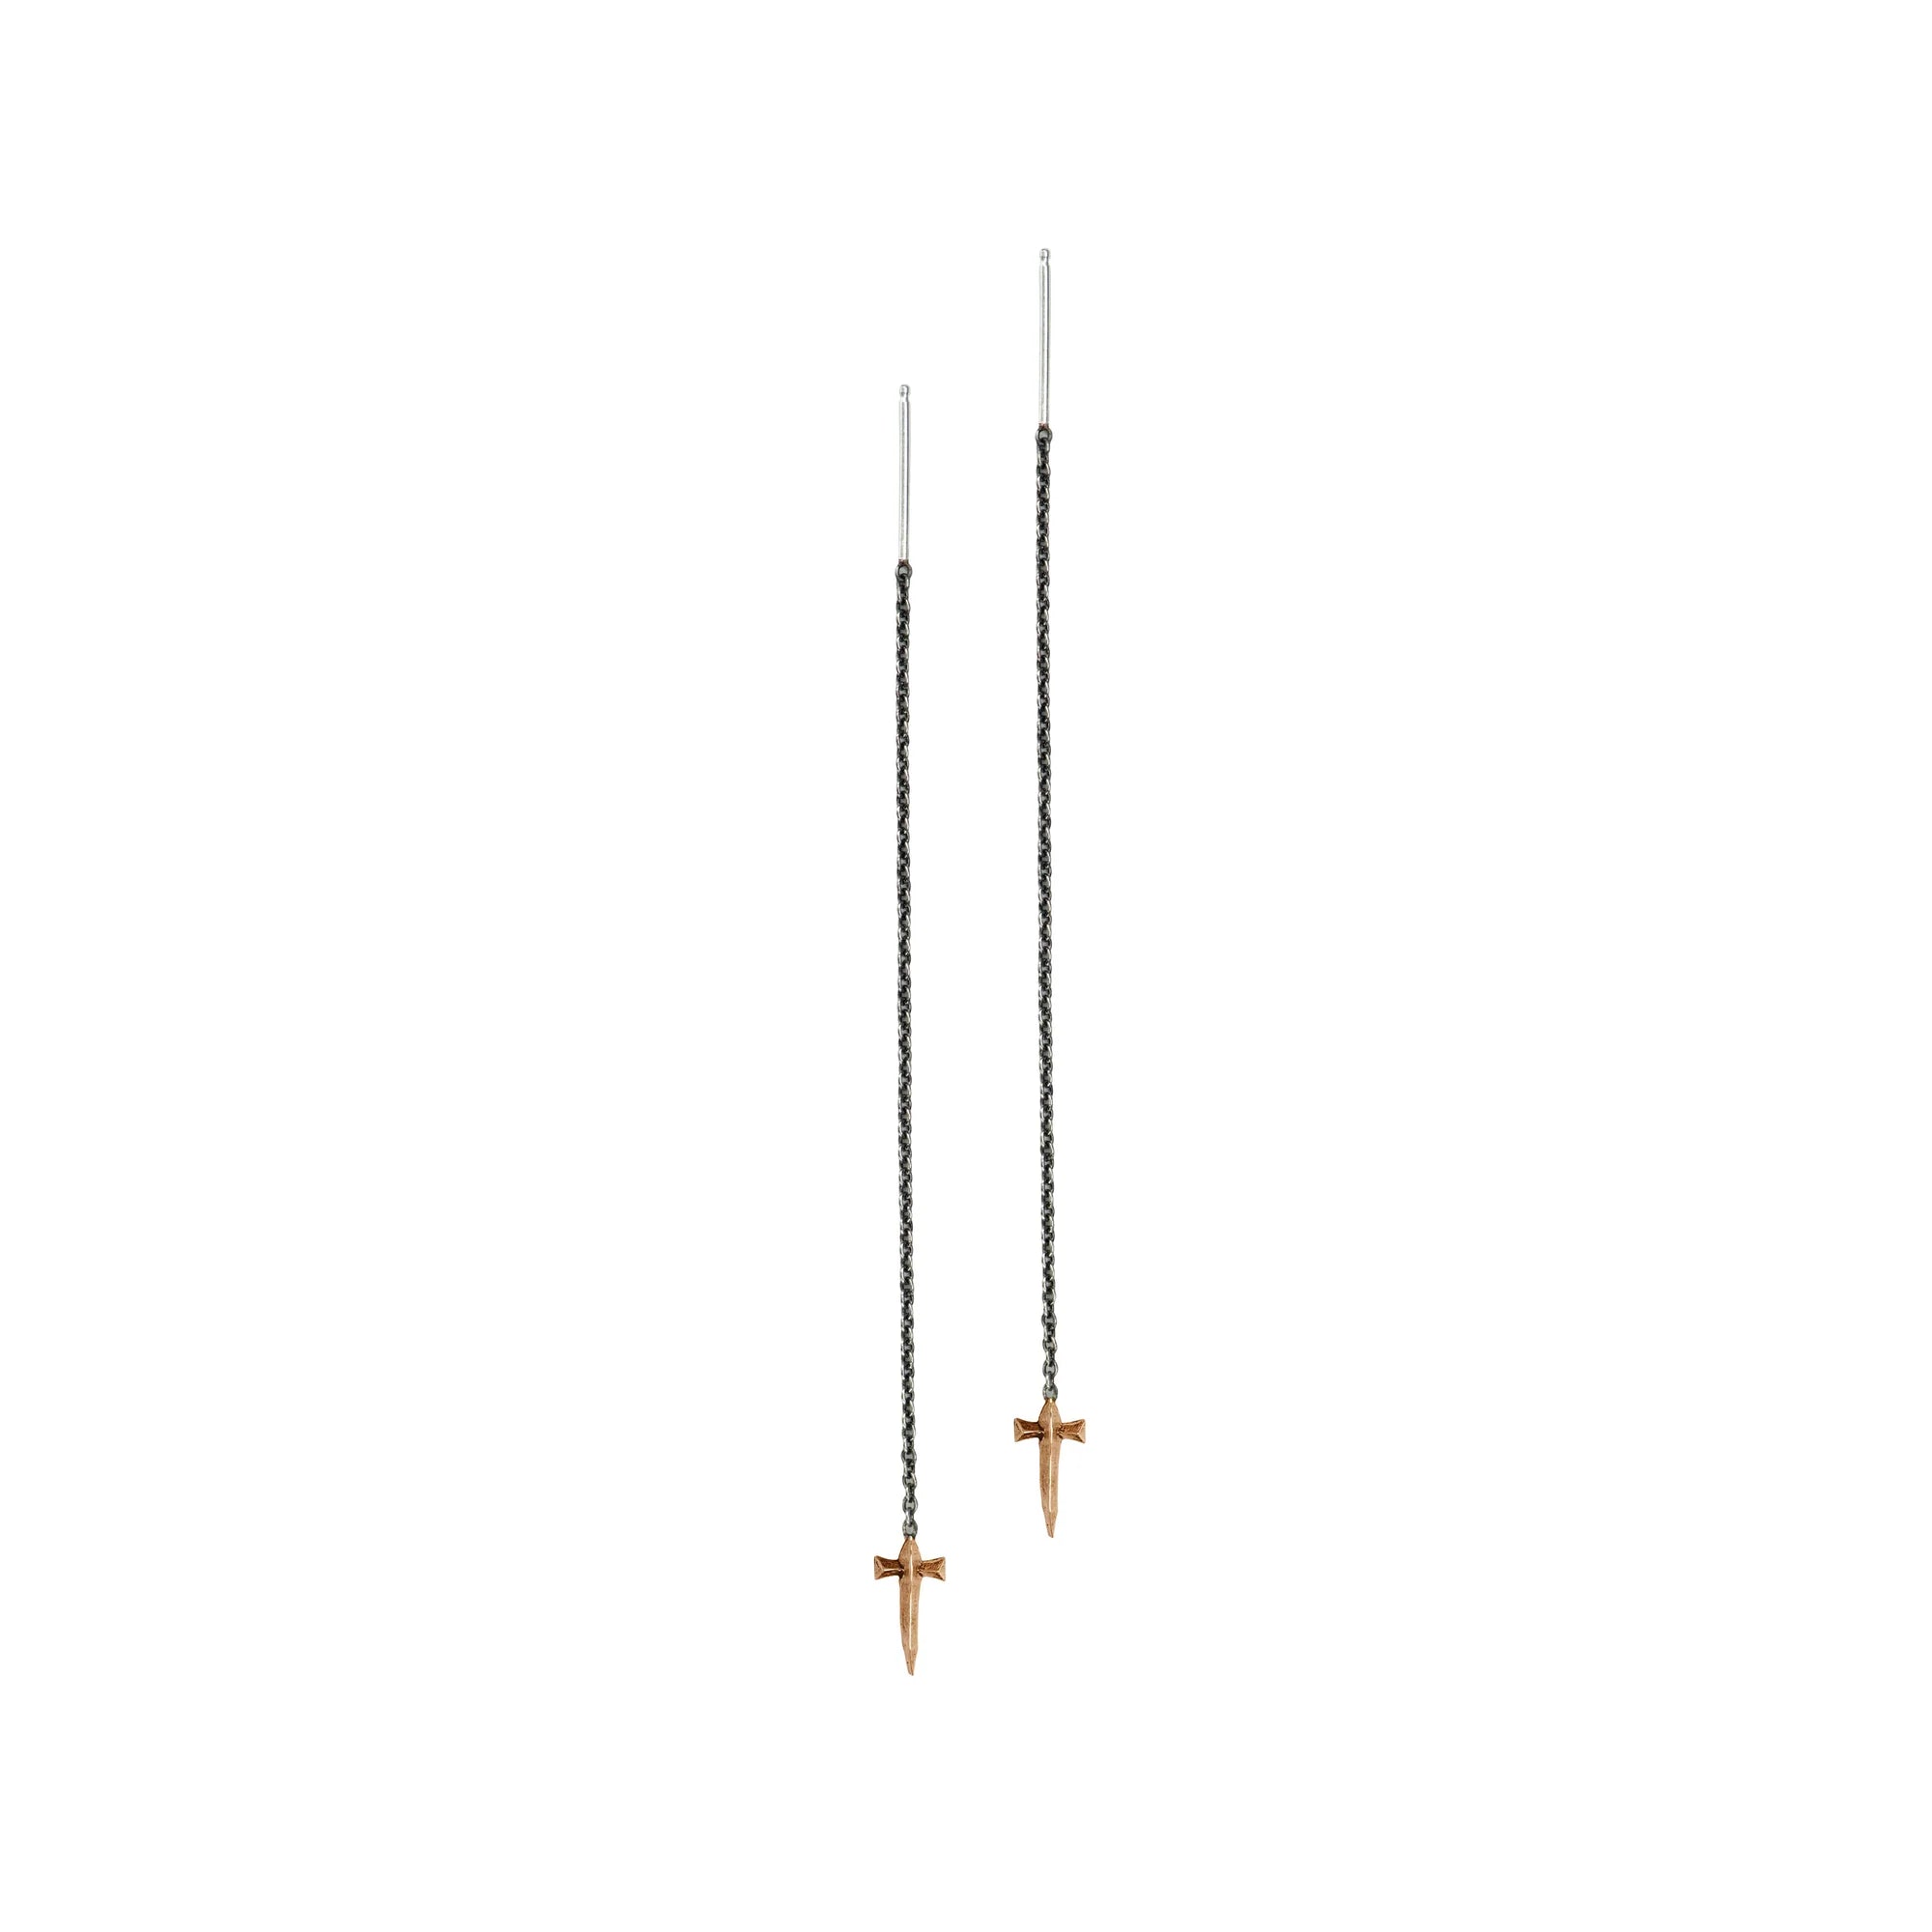 Pyrrha Dagger Thread Through Symbol Earrings  BE11-4010  Bronze